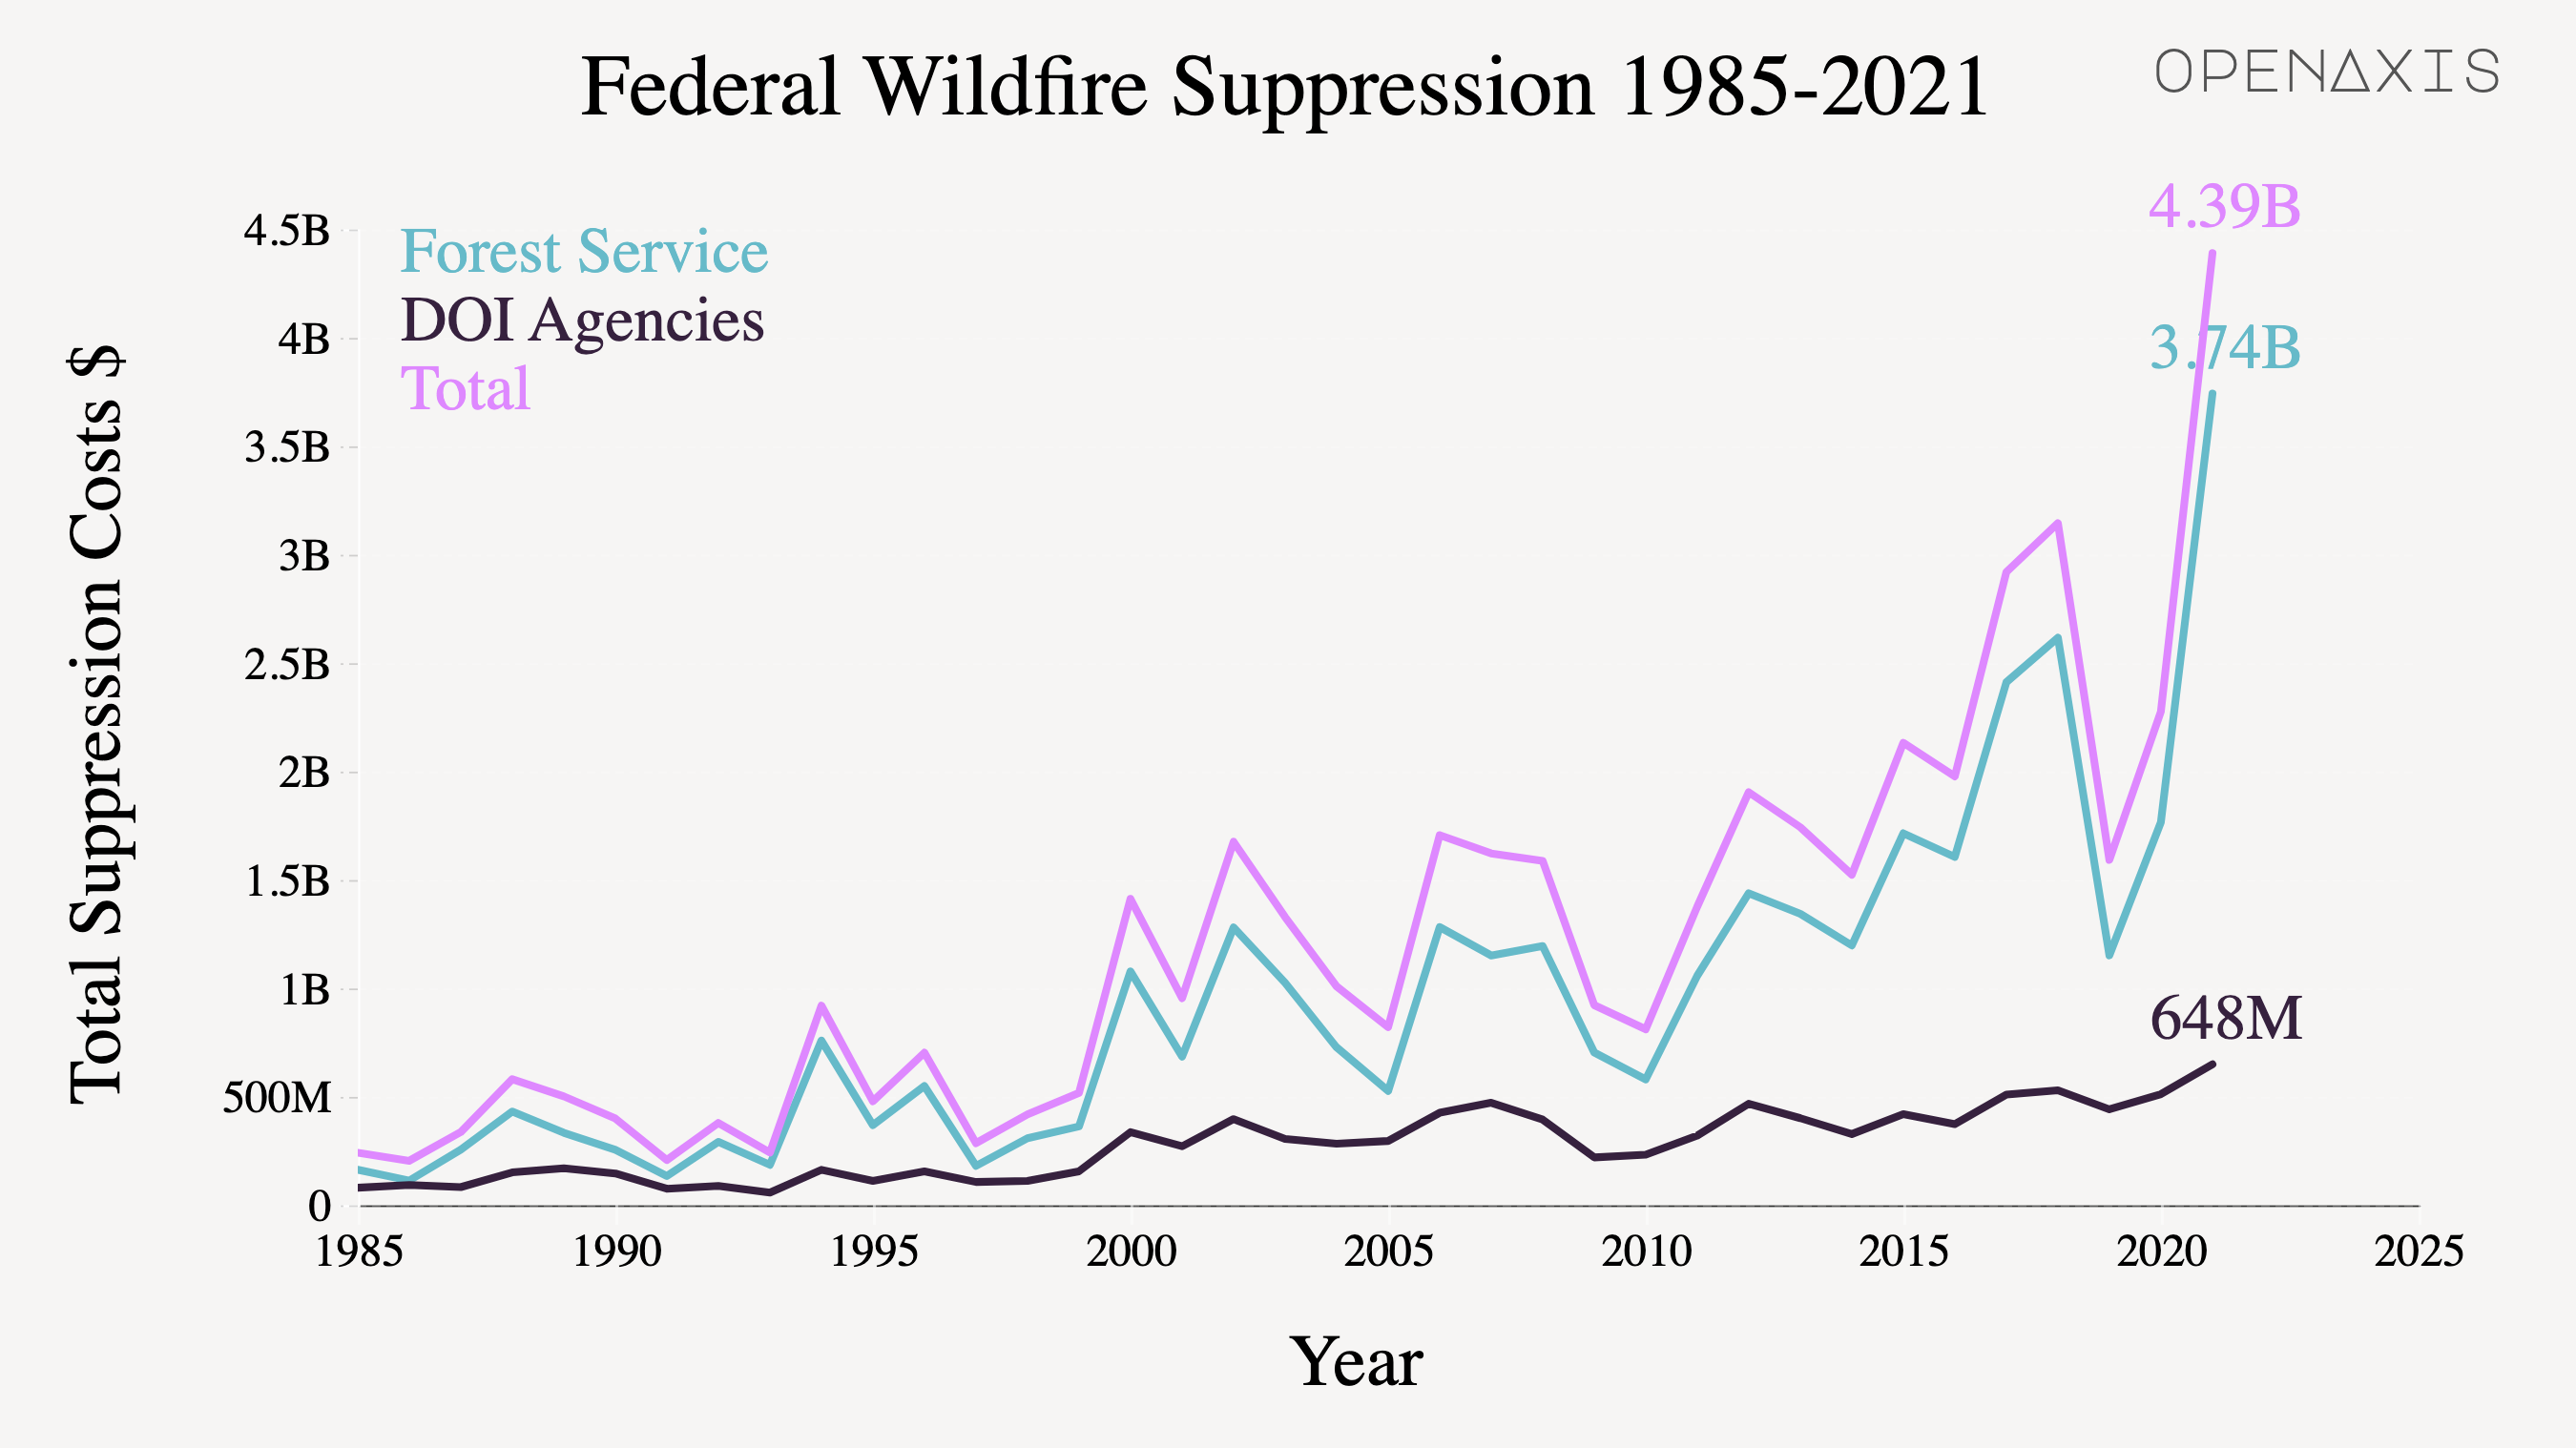 "Federal Wildfire Suppression 1985-2021"